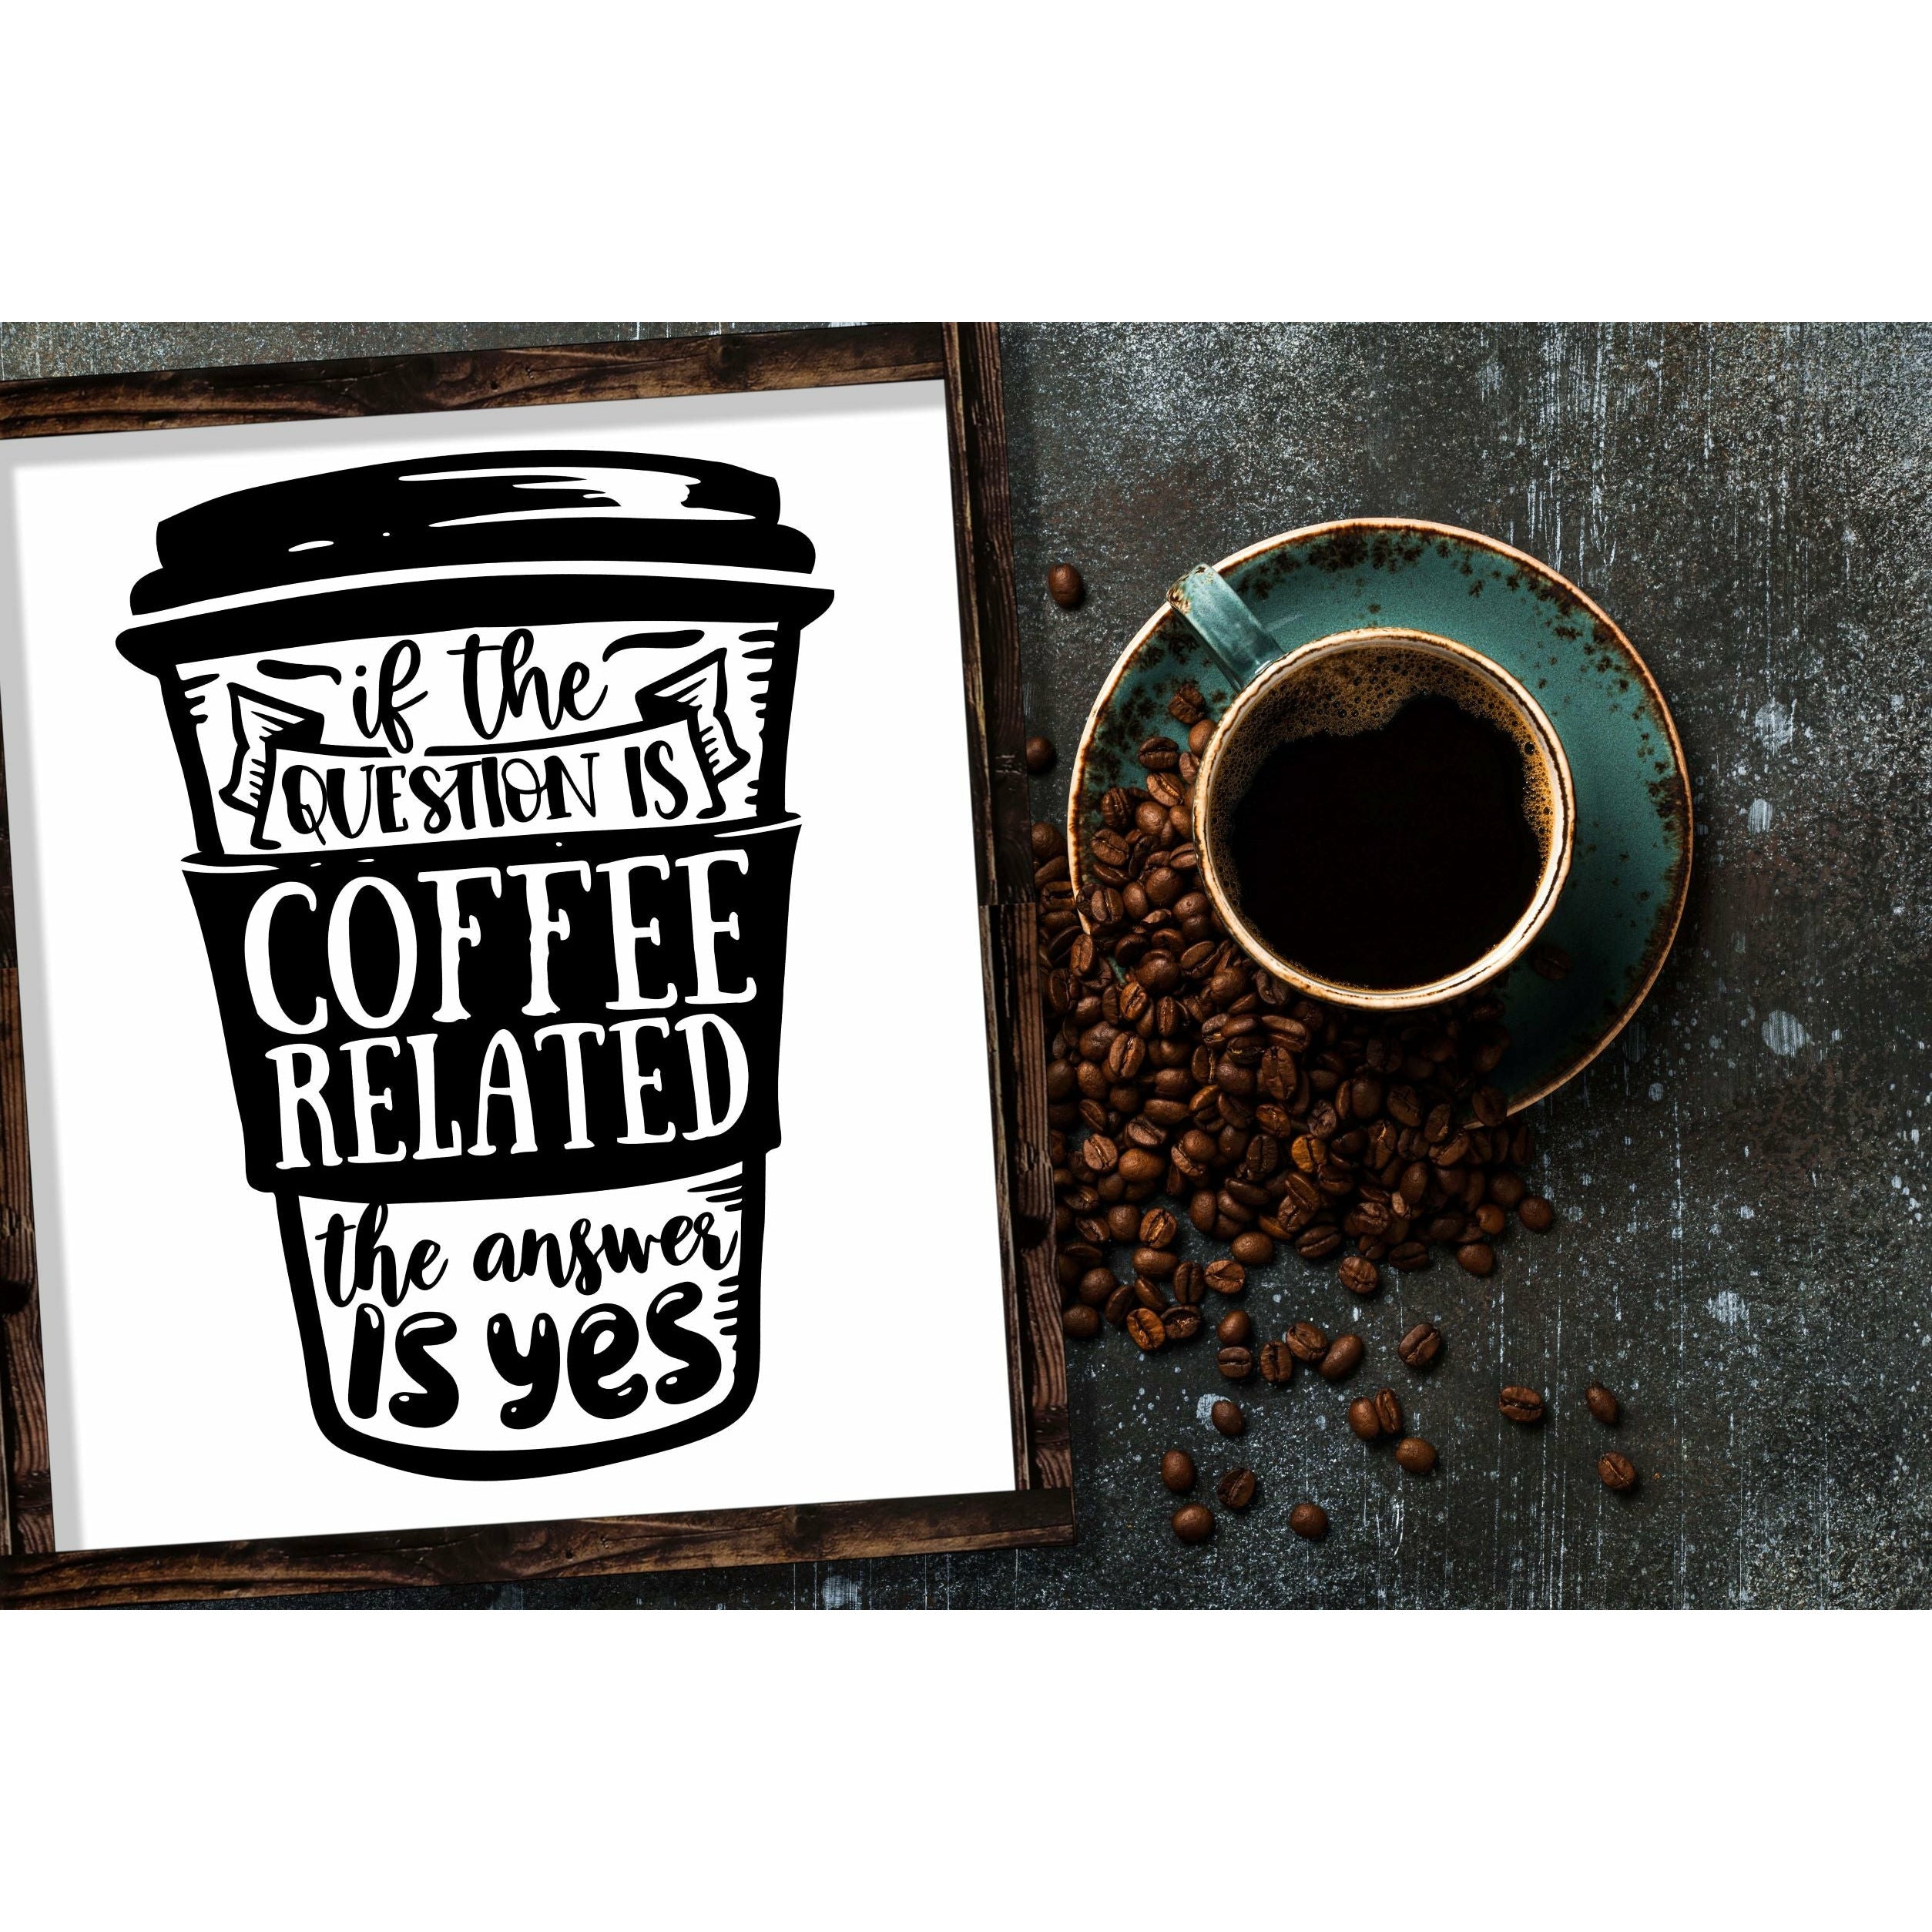 H&S COFFEE CO. WORKSHOP